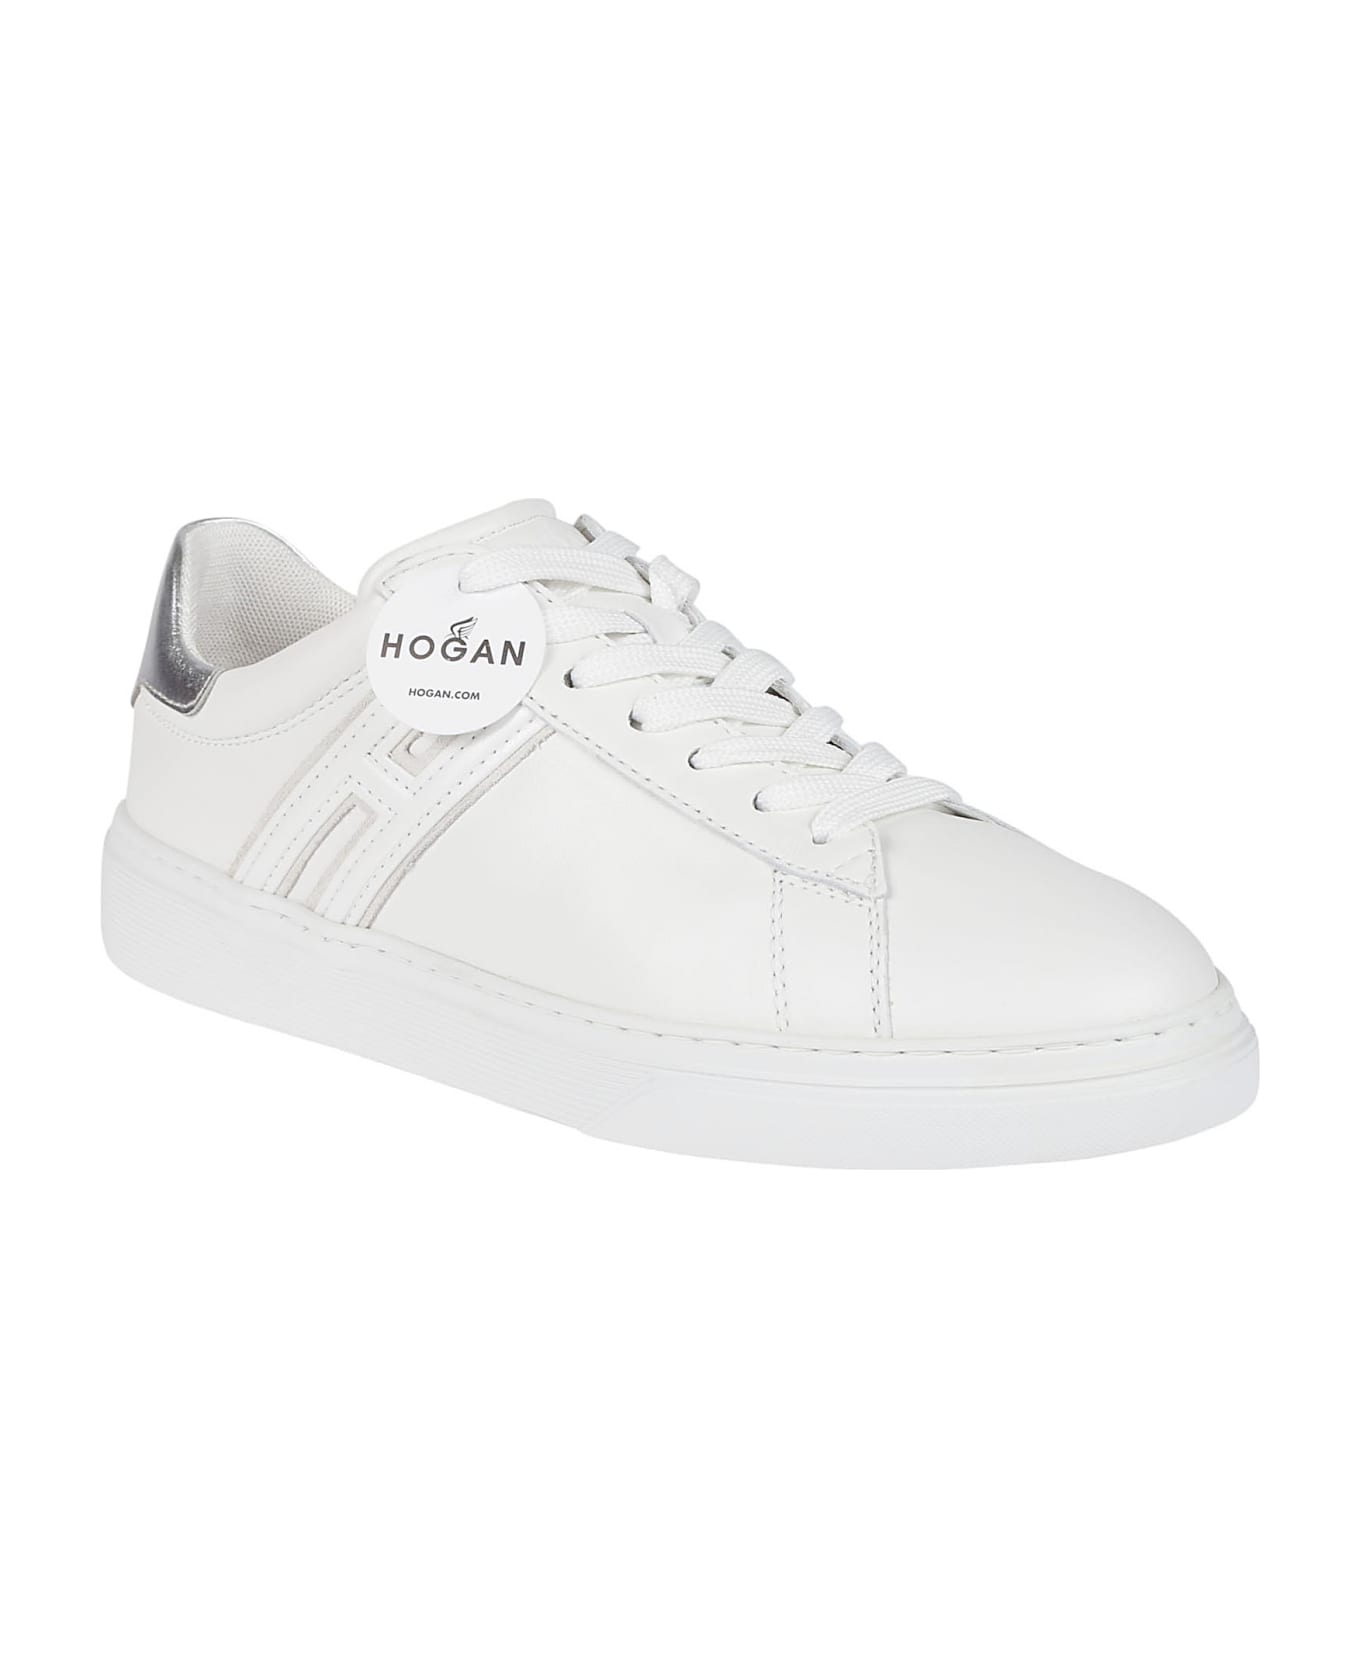 Hogan H365 Sneakers - Bianco/argento